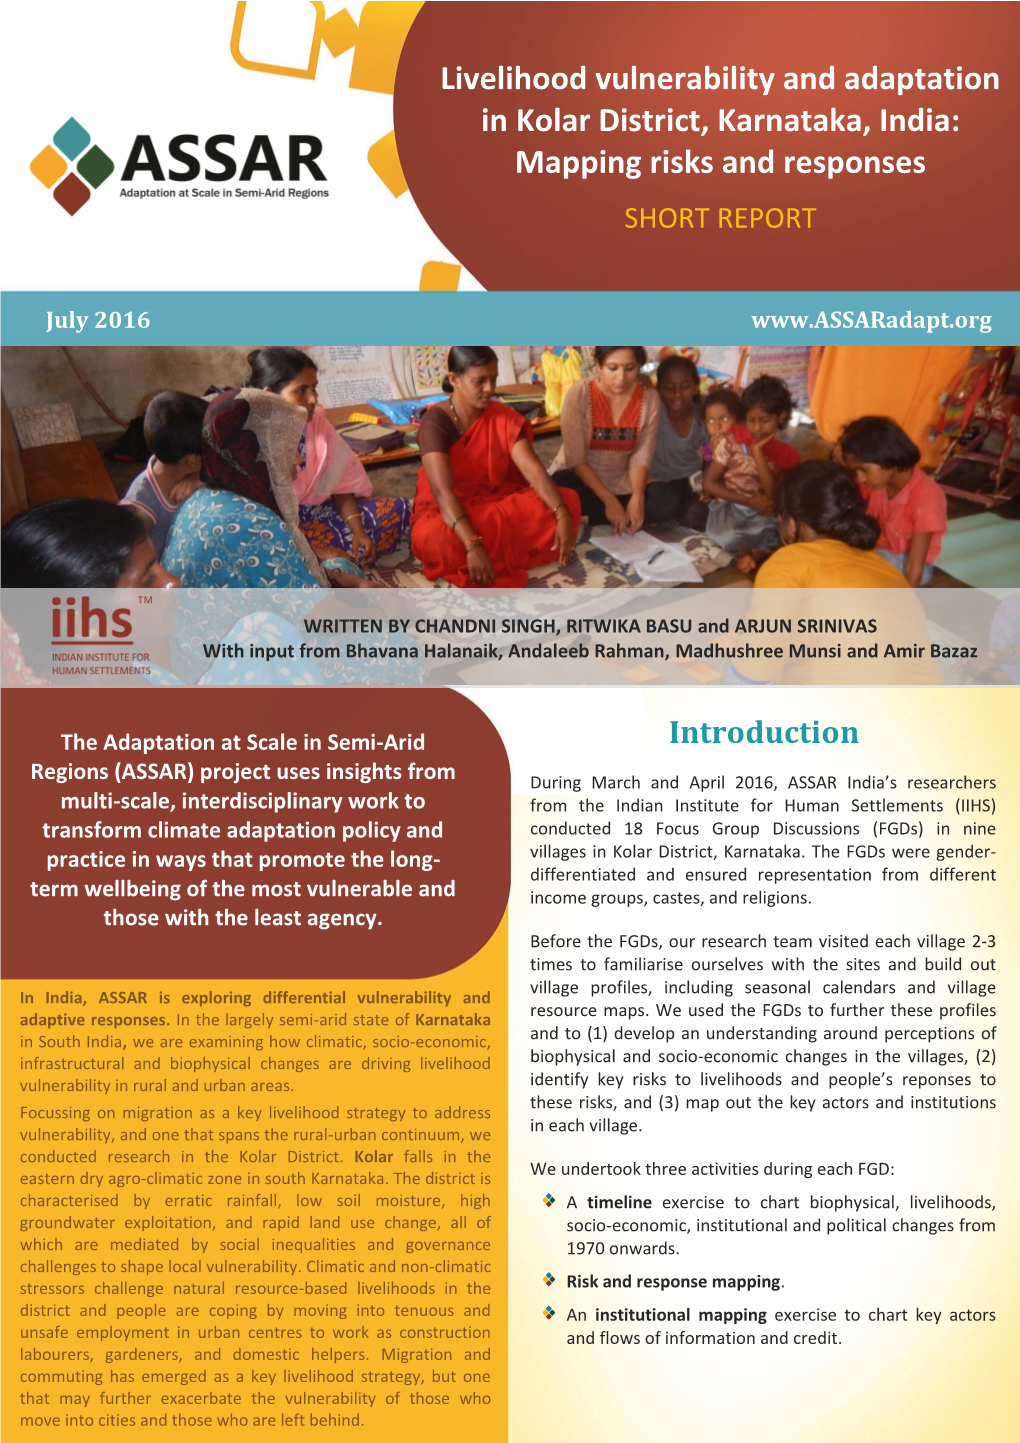 Livelihood Vulnerability and Adaptation in Kolar District, Karnataka, India: Mapping Risks and Responses